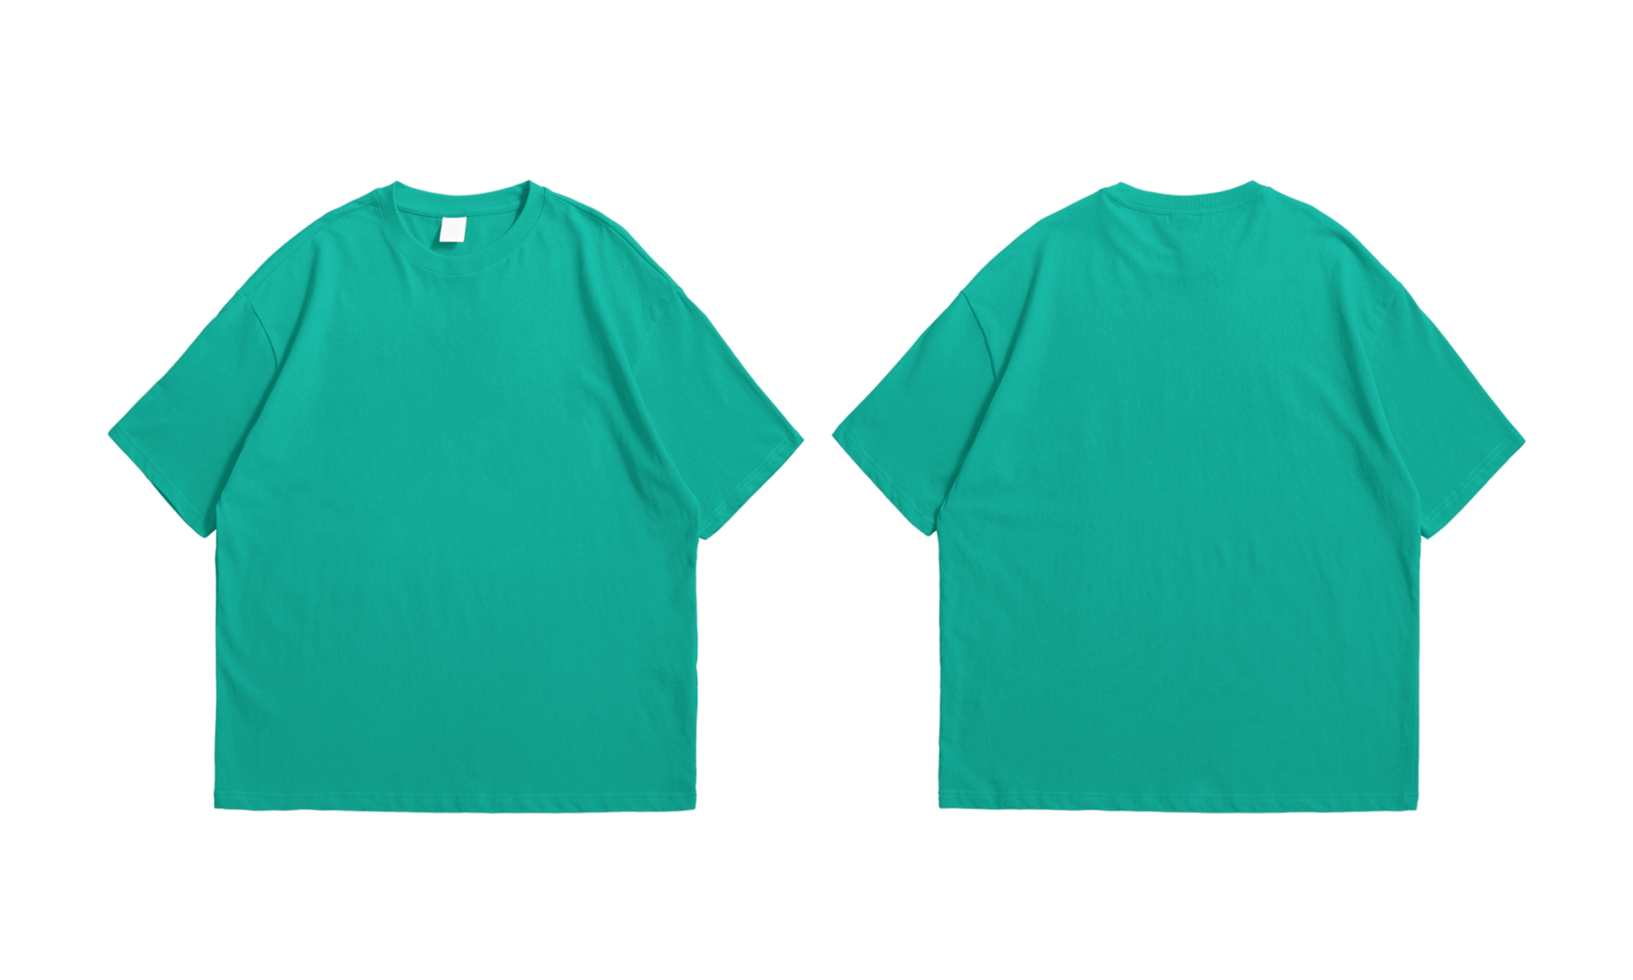 Oversize teal t-shirt front and back background transparent png